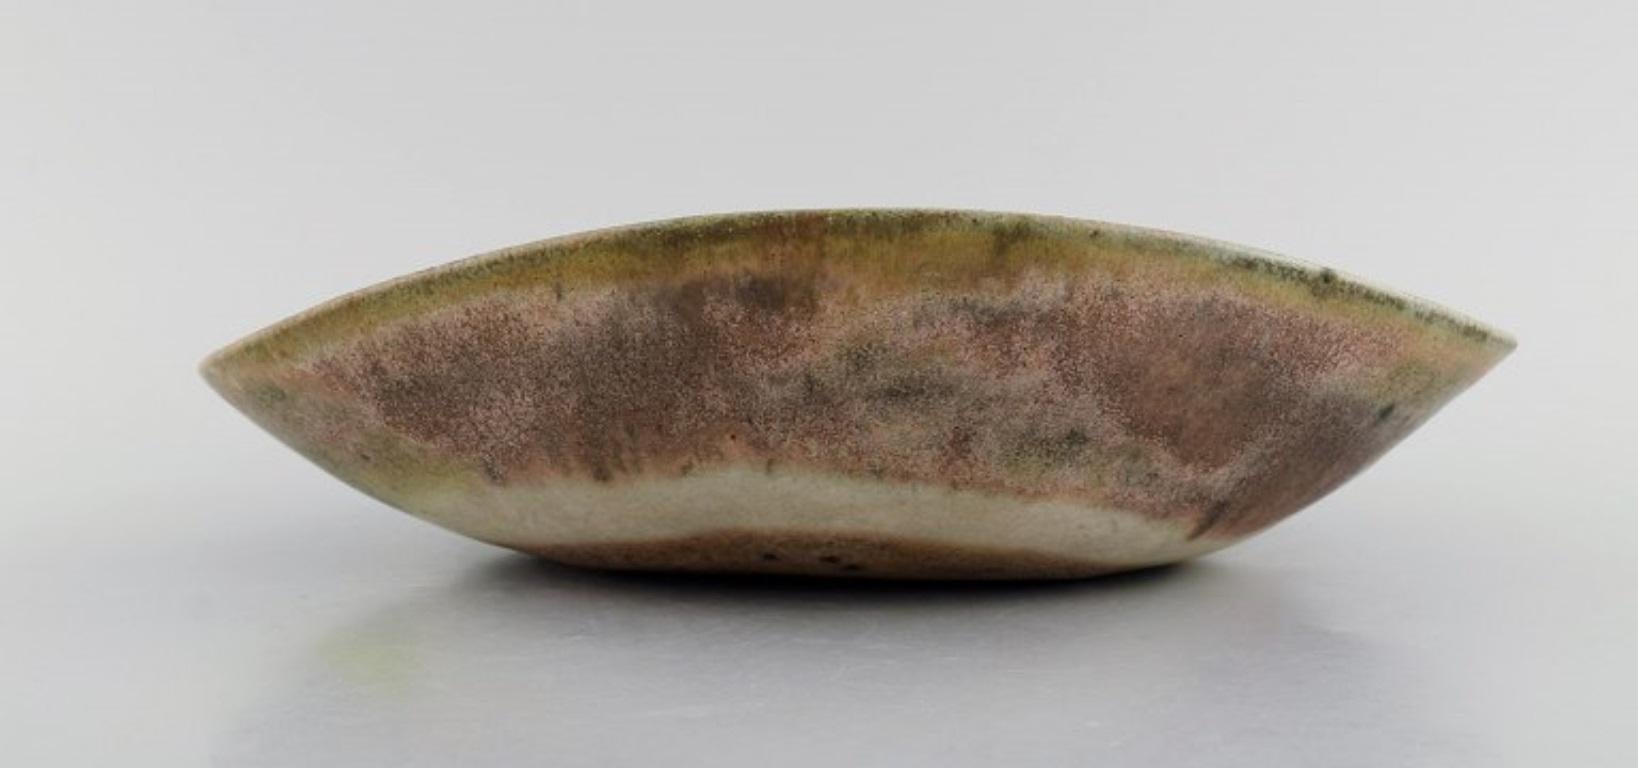 Late 20th Century Lucie Rie, Austrian-born British ceramist. Large modernist bowl in stoneware. For Sale